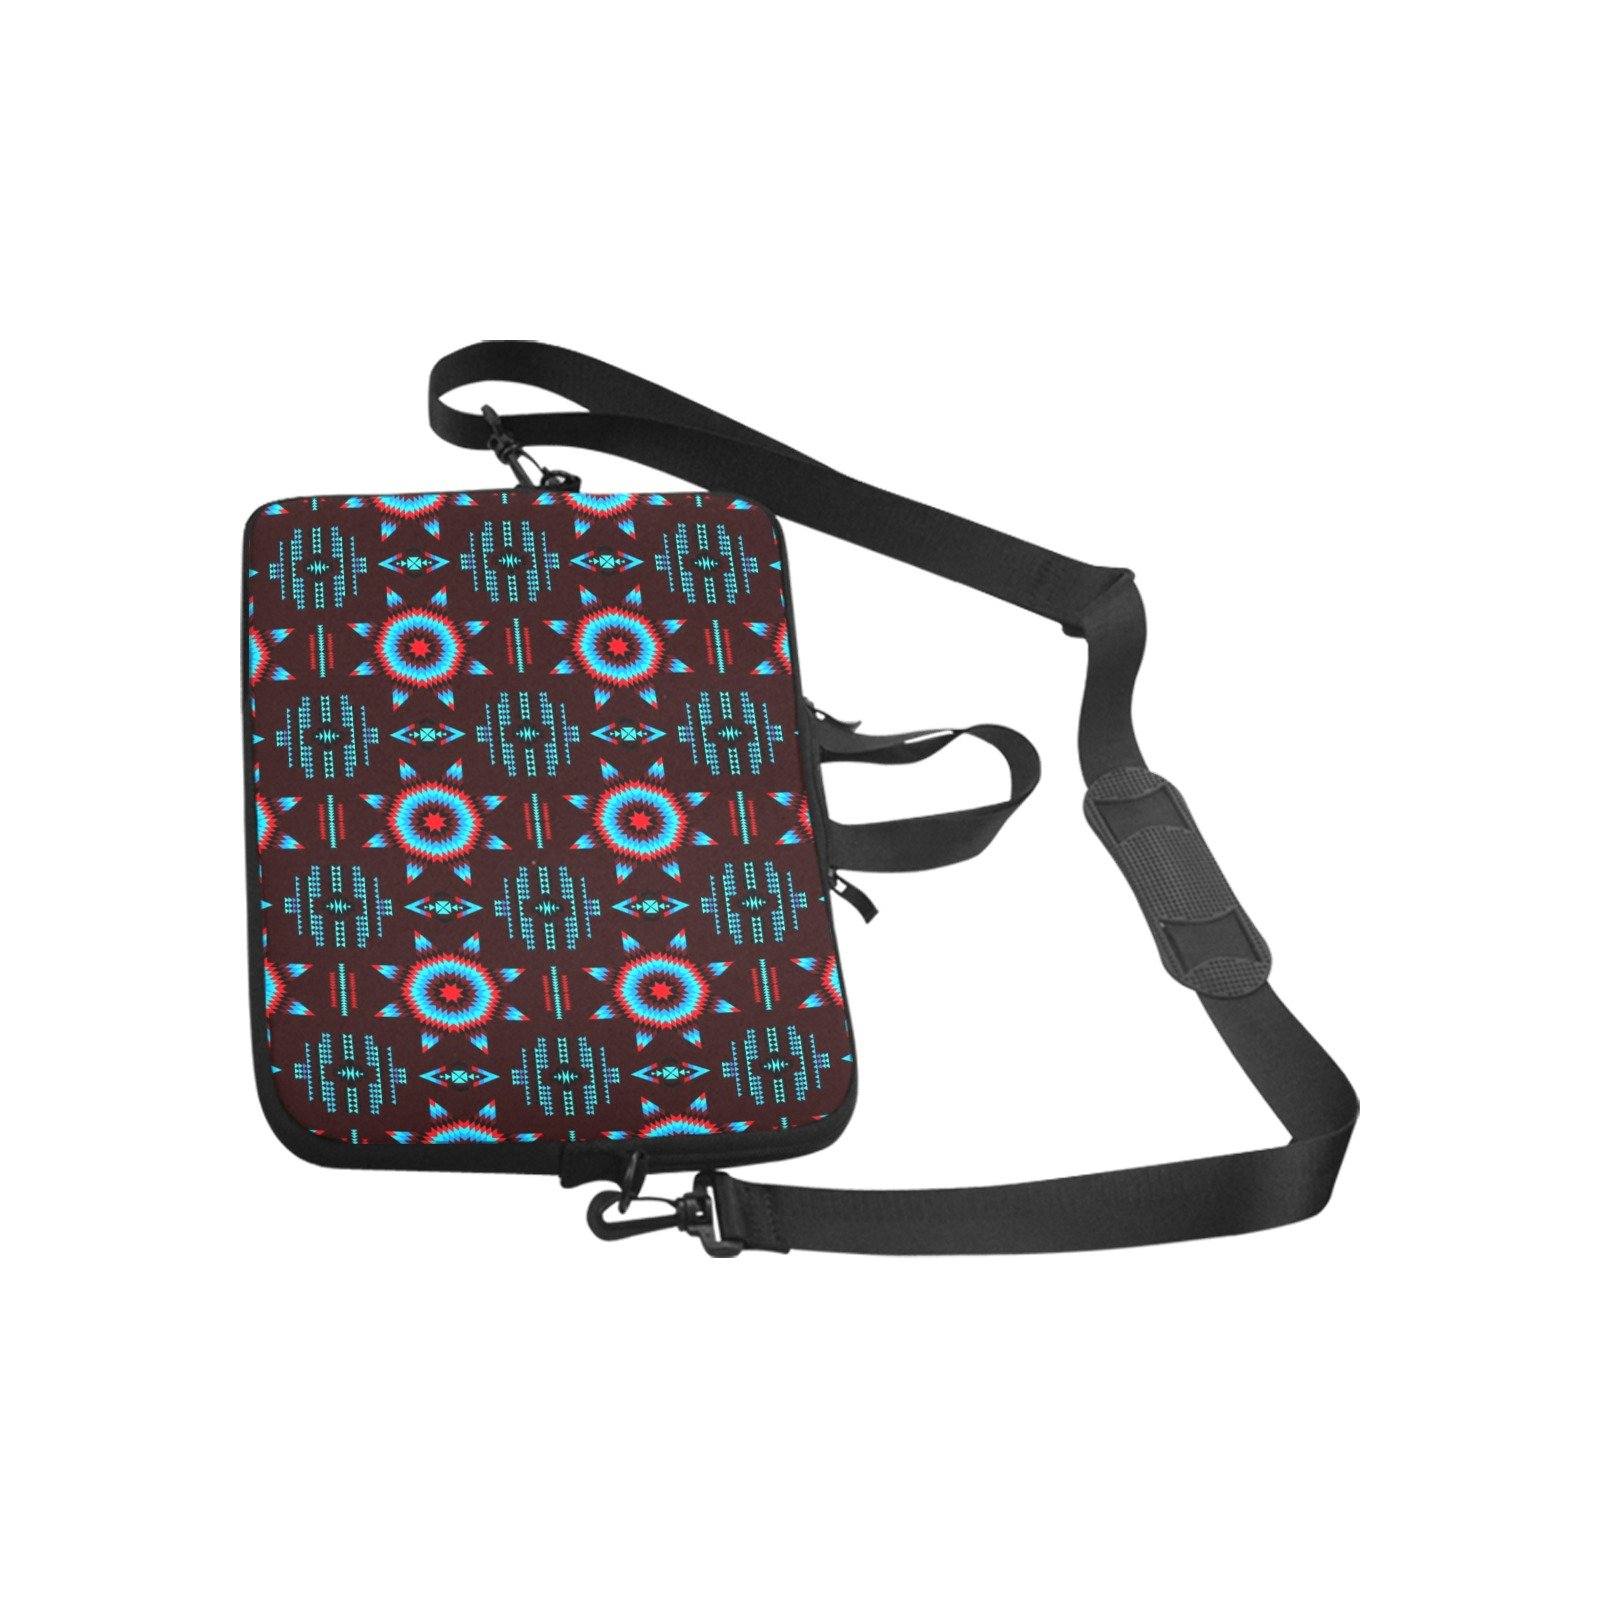 Rising Star Corn Moon Laptop Handbags 11" bag e-joyer 